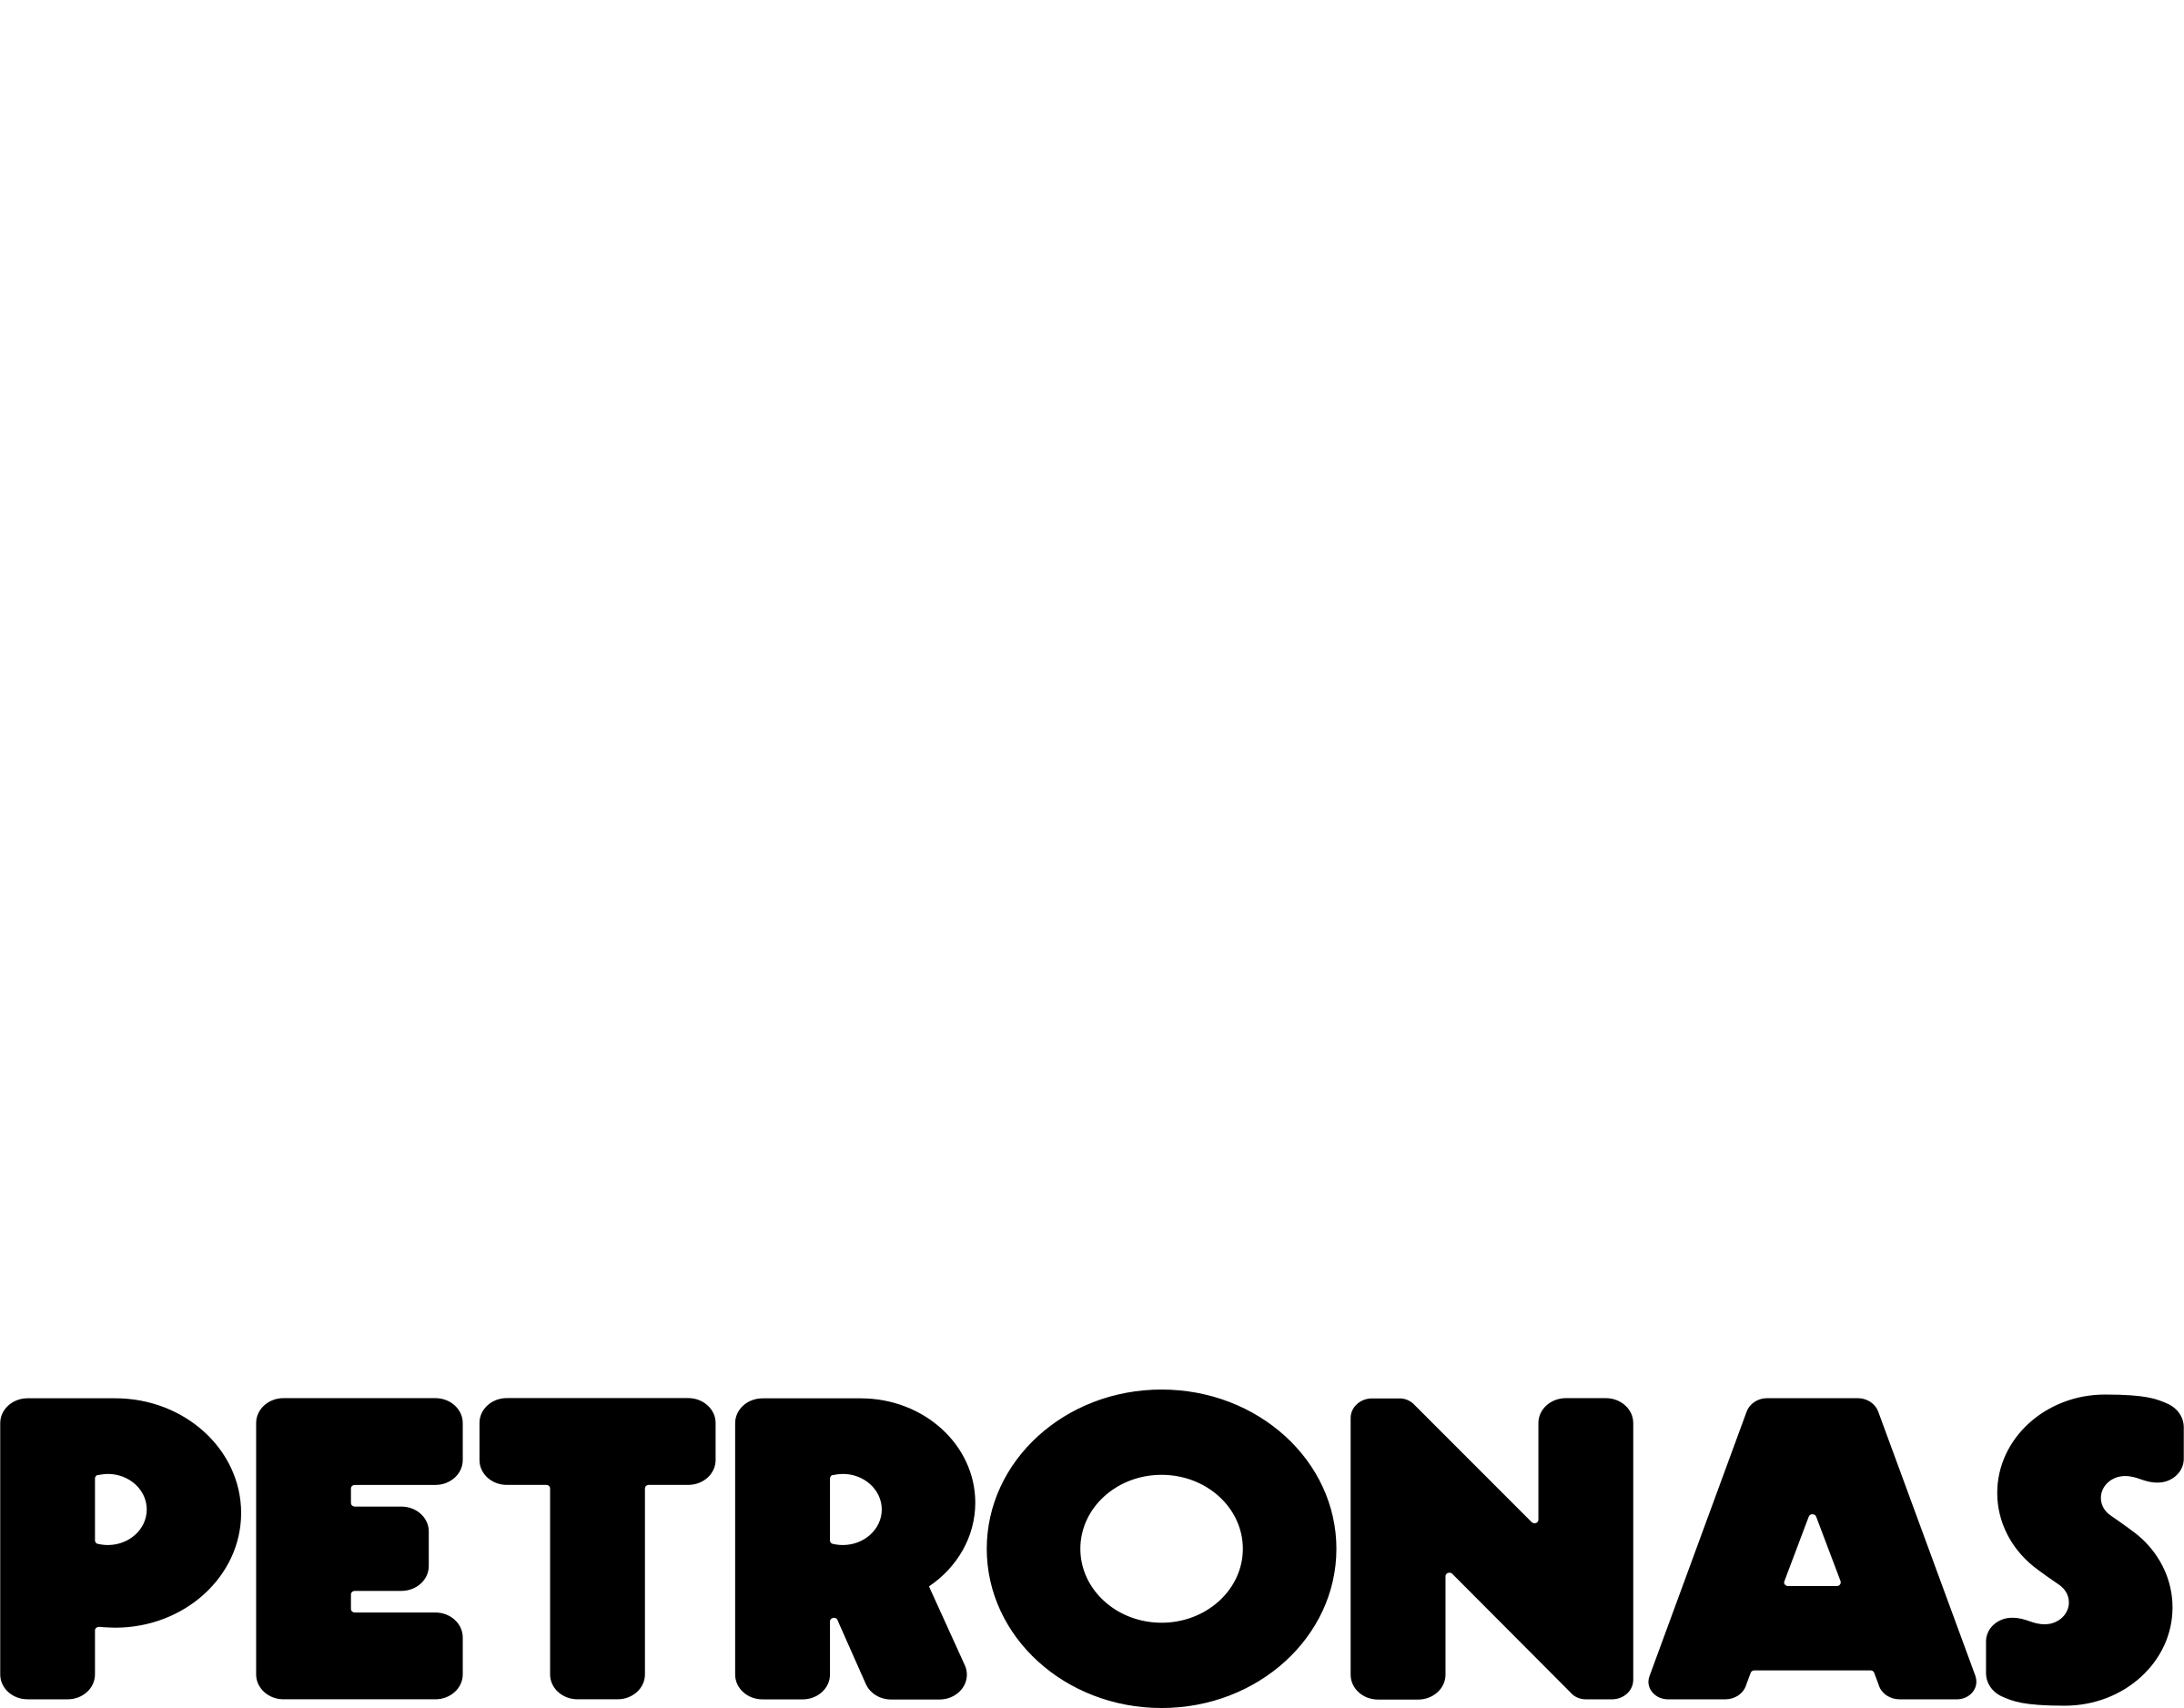 Petronas Logo Logodix